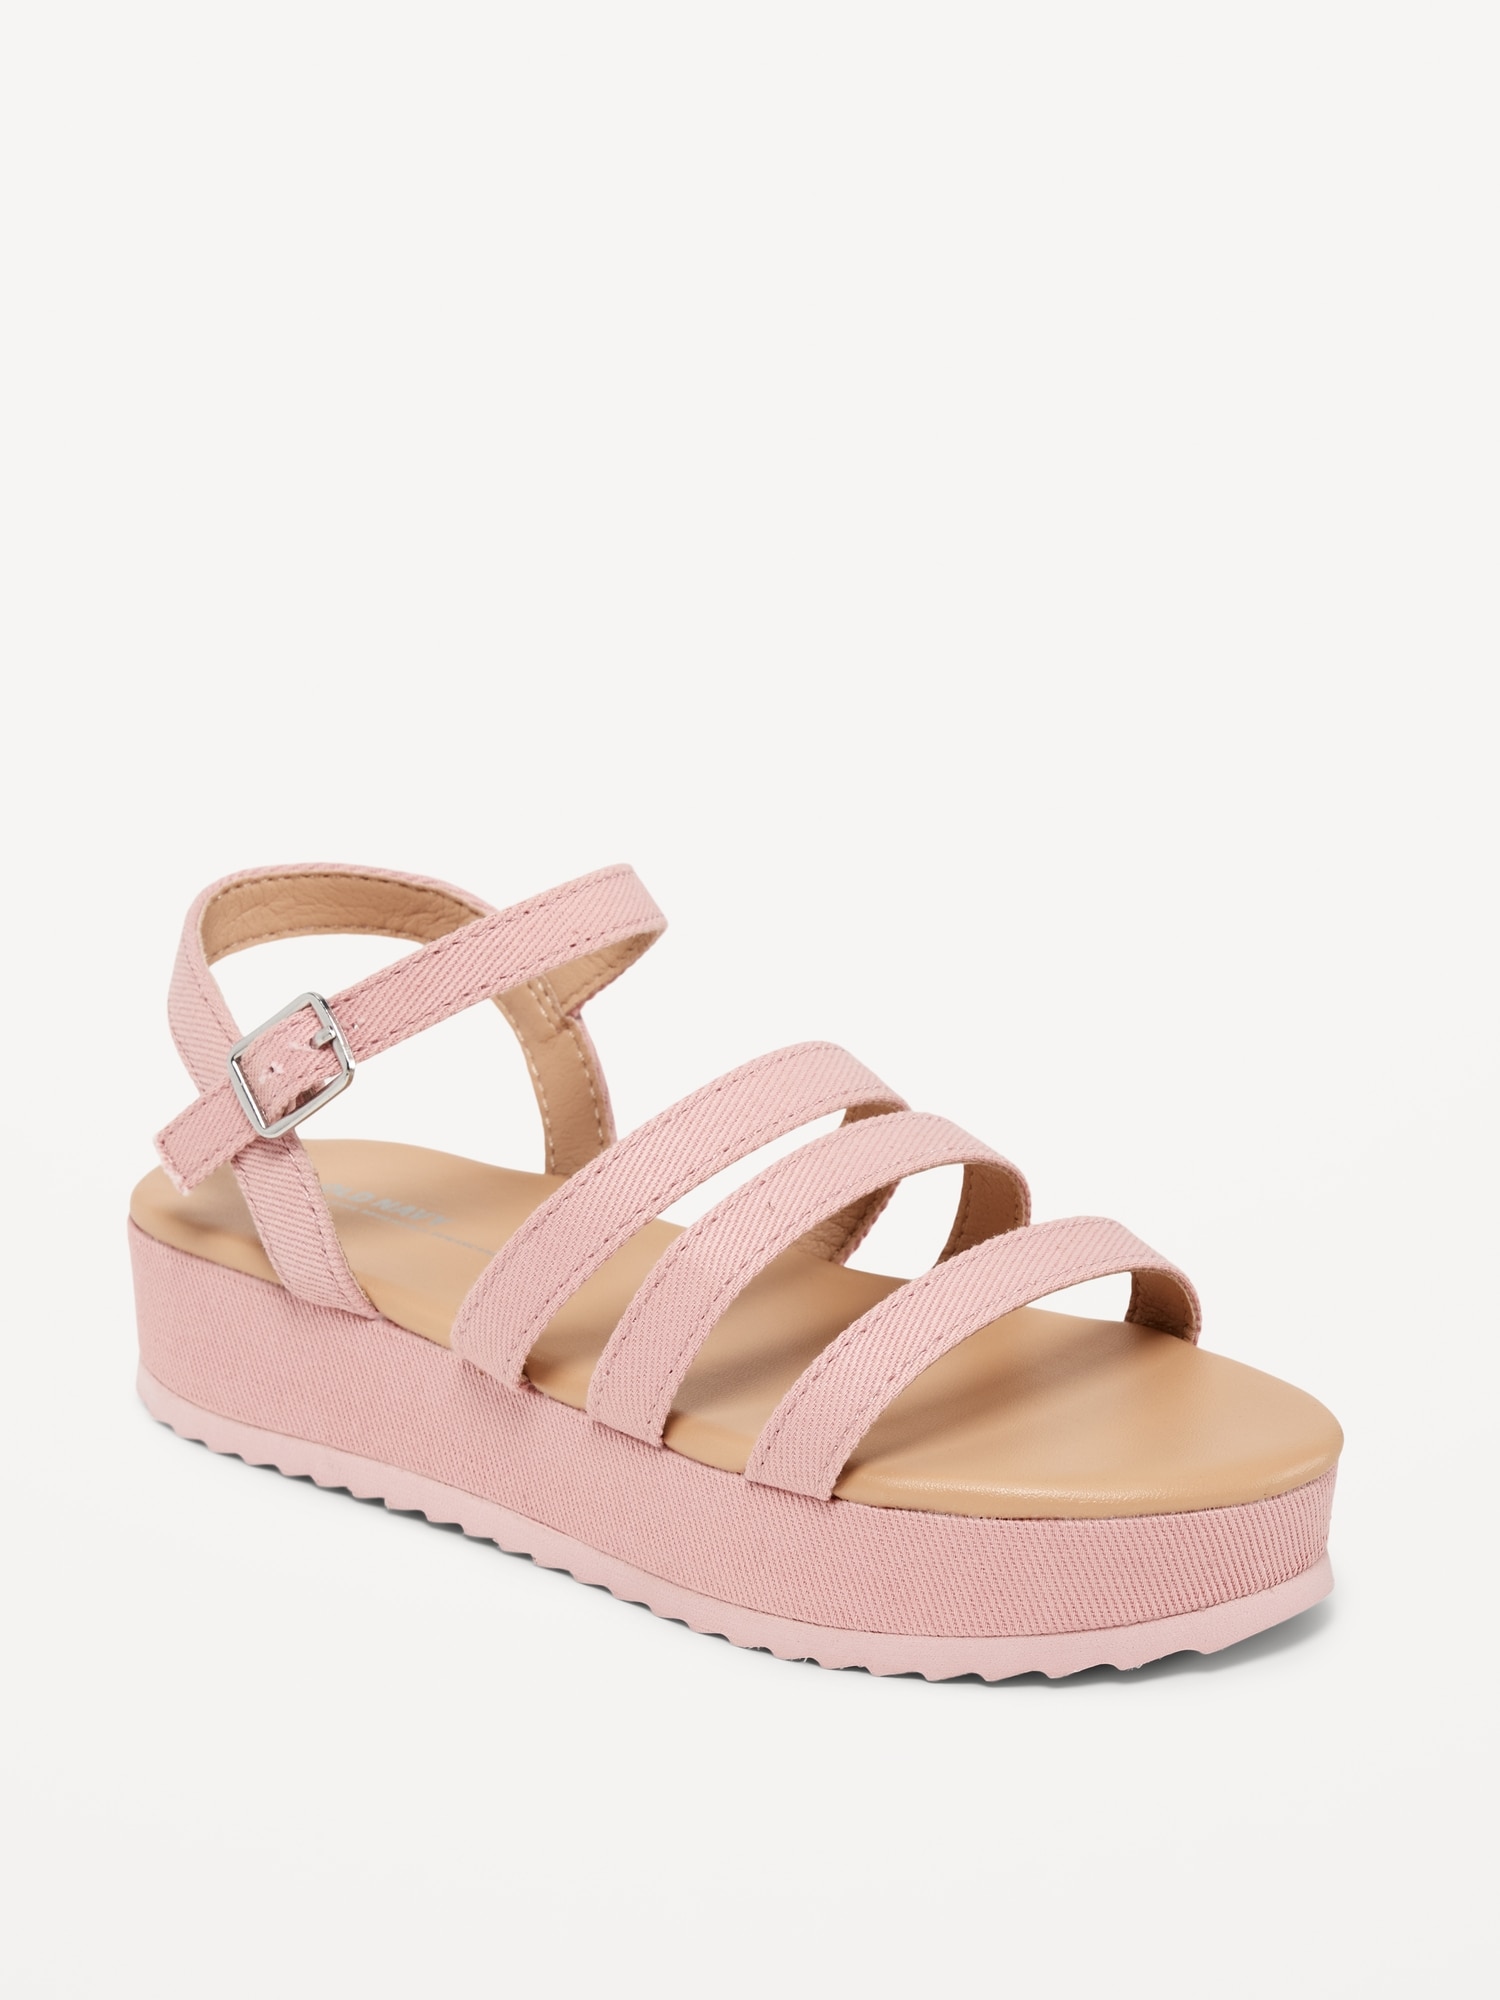 Old Navy Twill Strappy Platform Sandals for Girls pink. 1